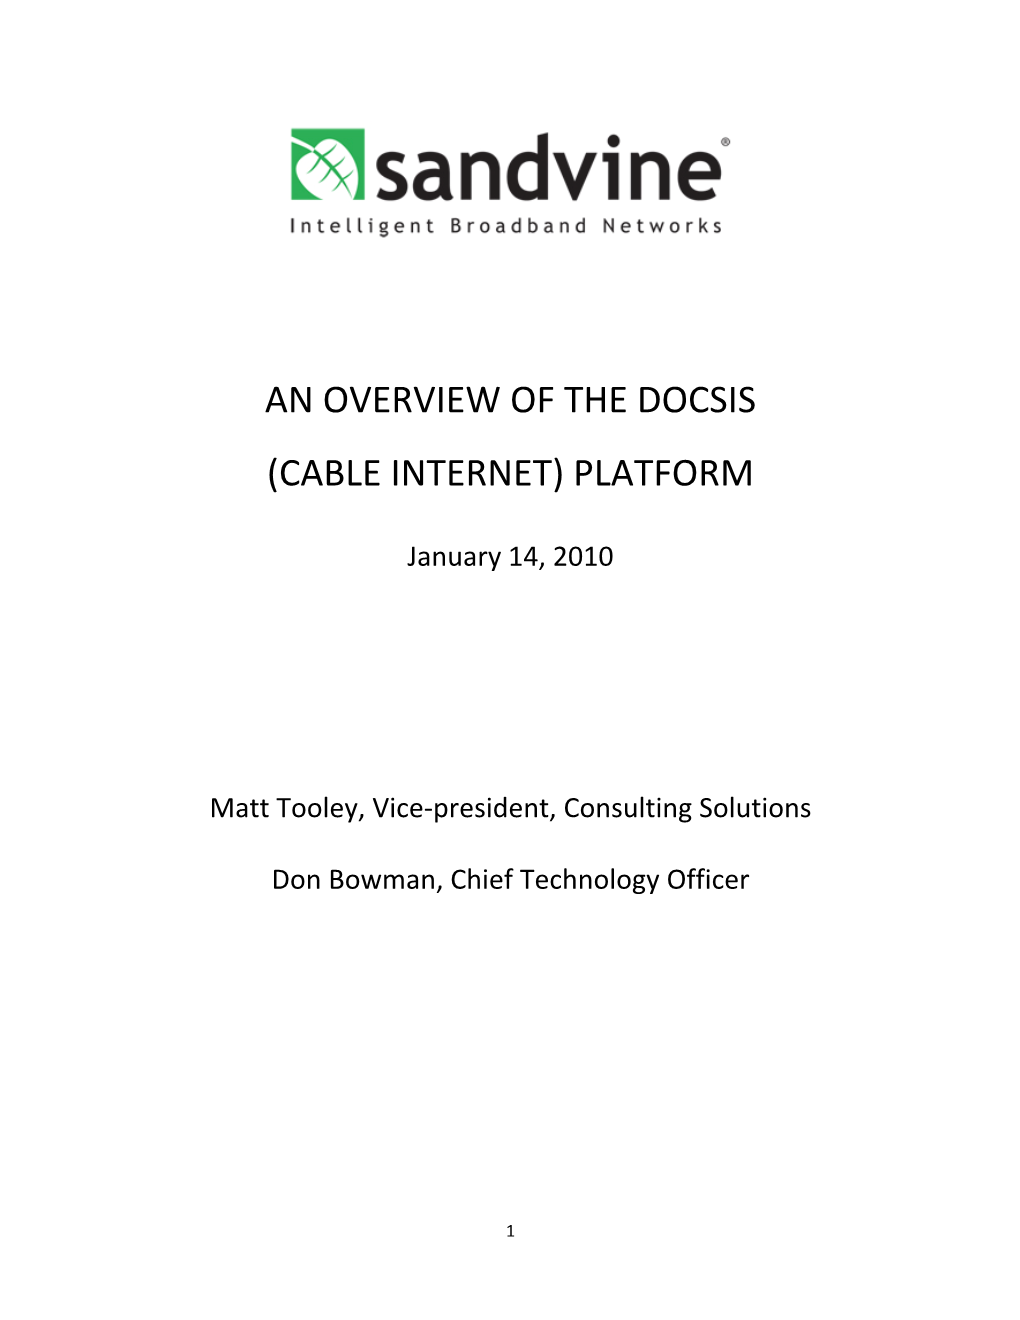 Cable Internet) Platform